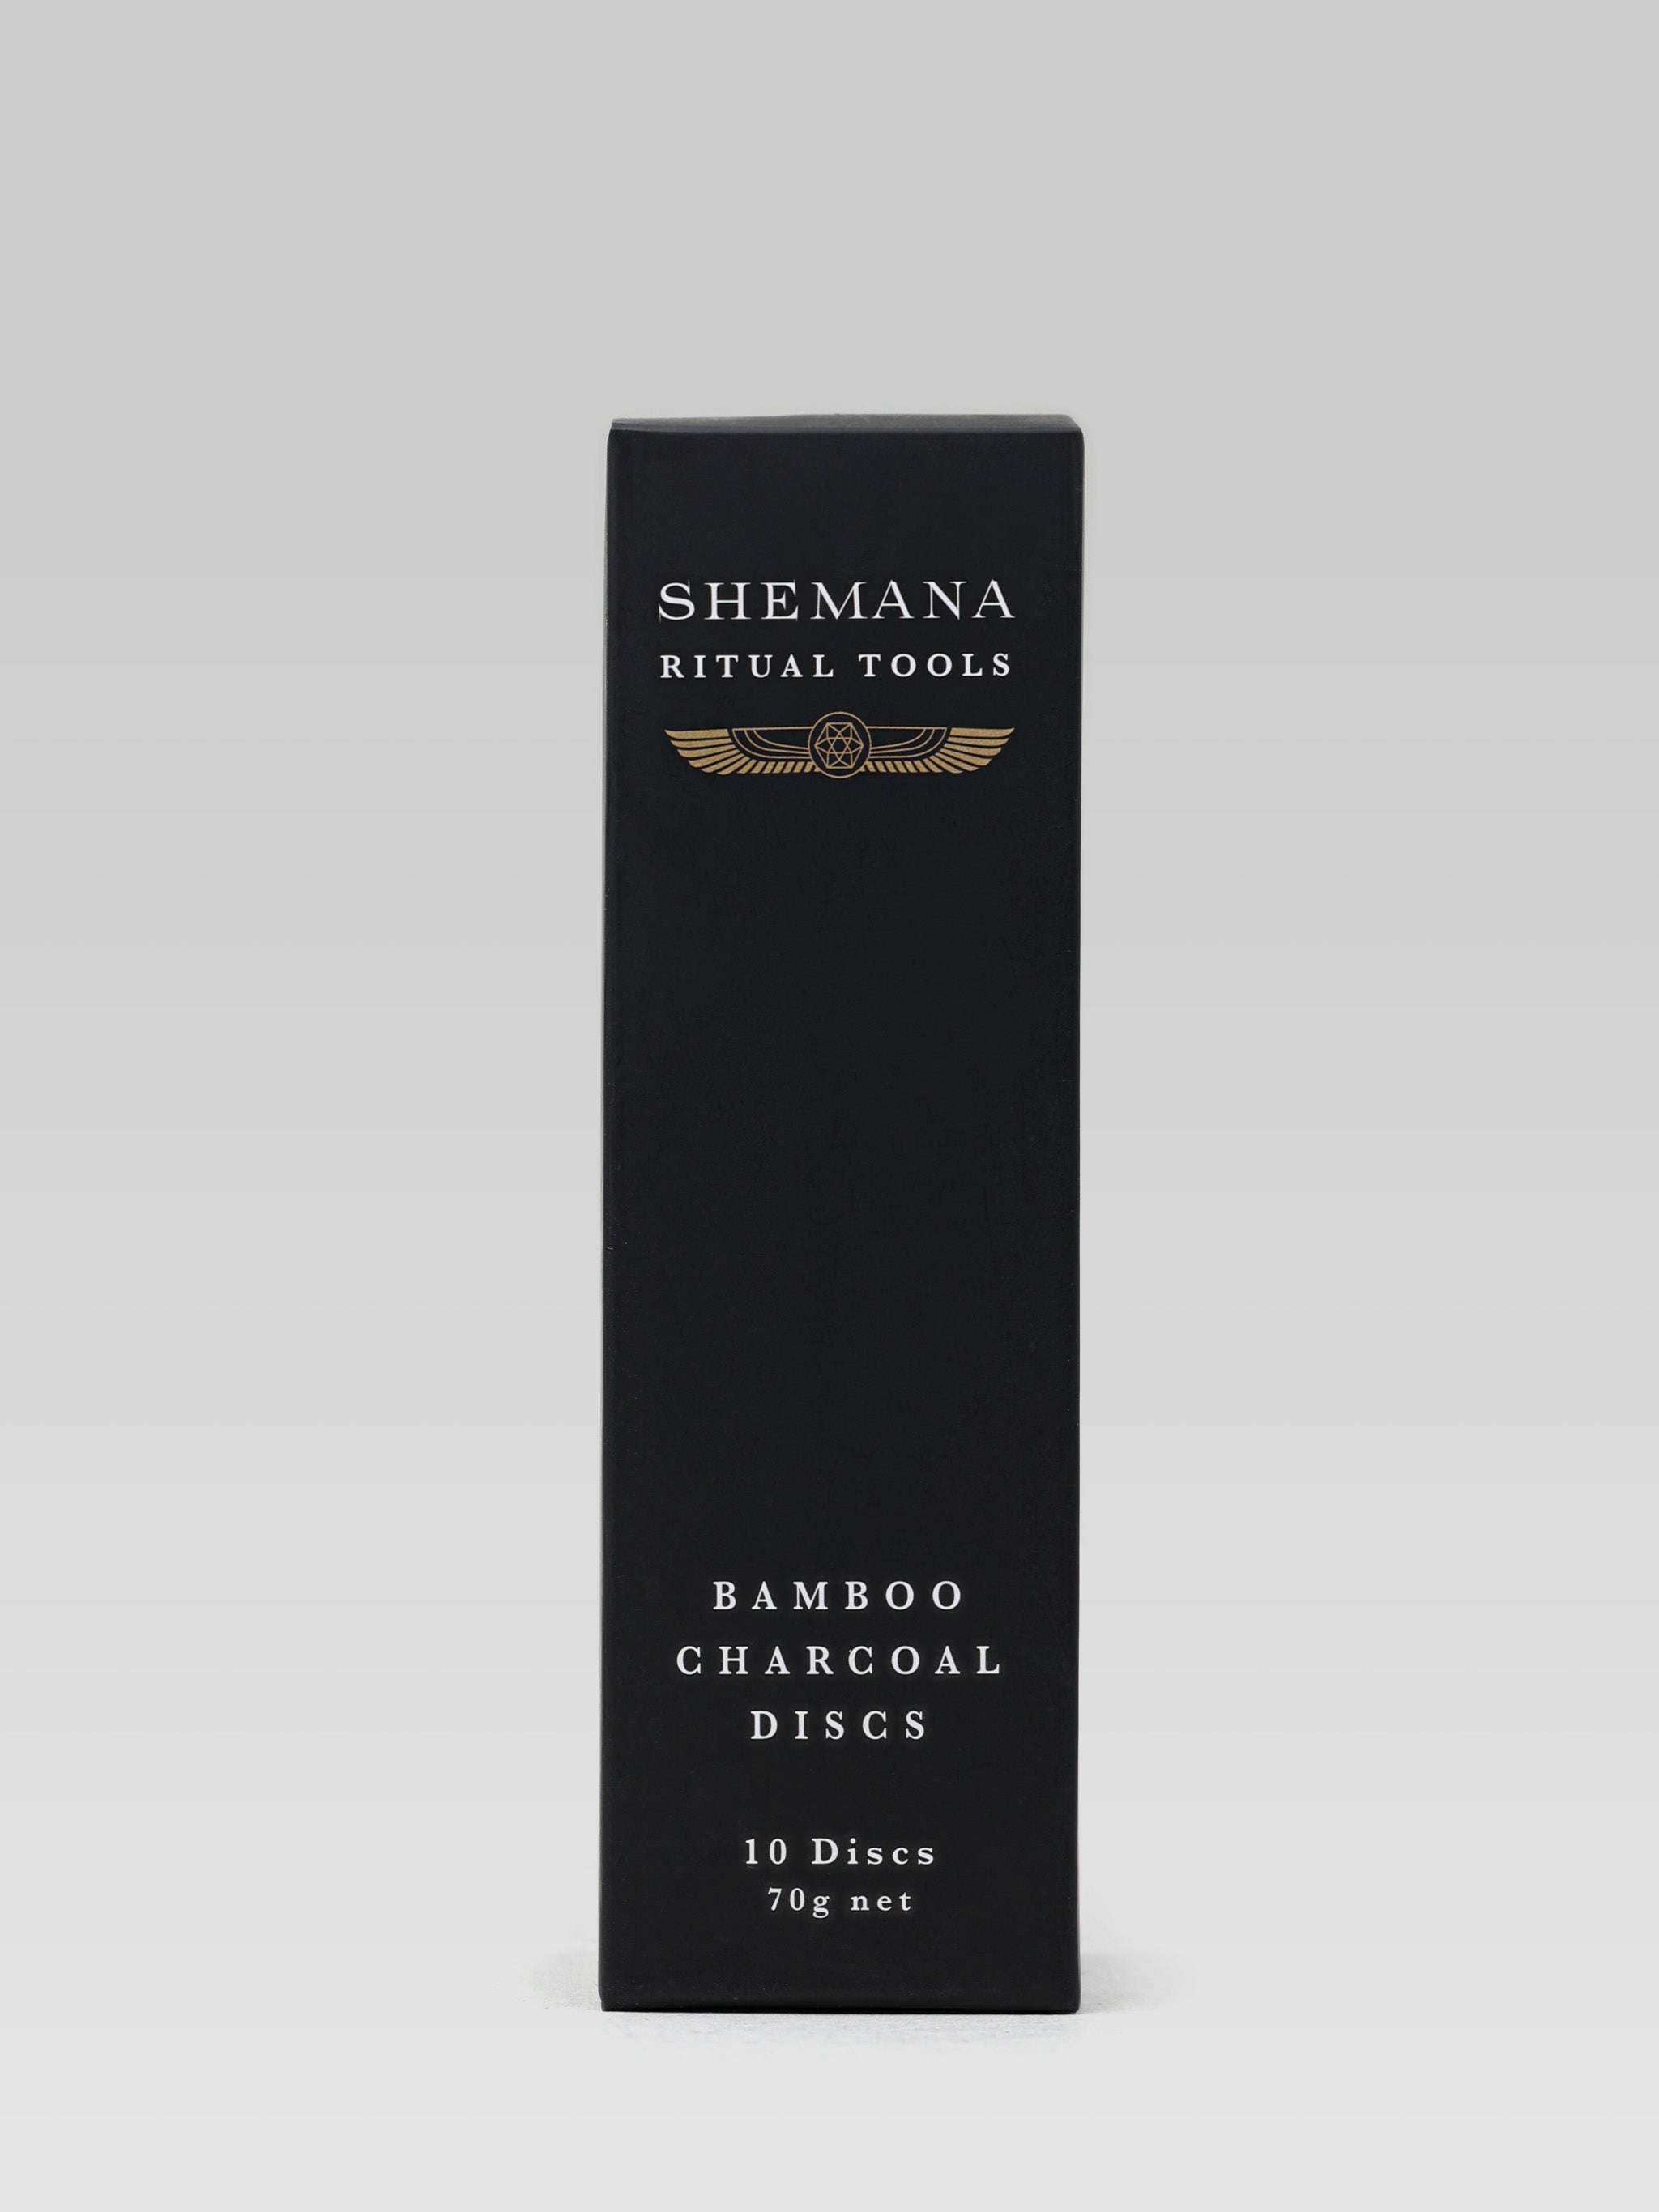 SHEMANA Bamboo Charcoal Discs product packaging 